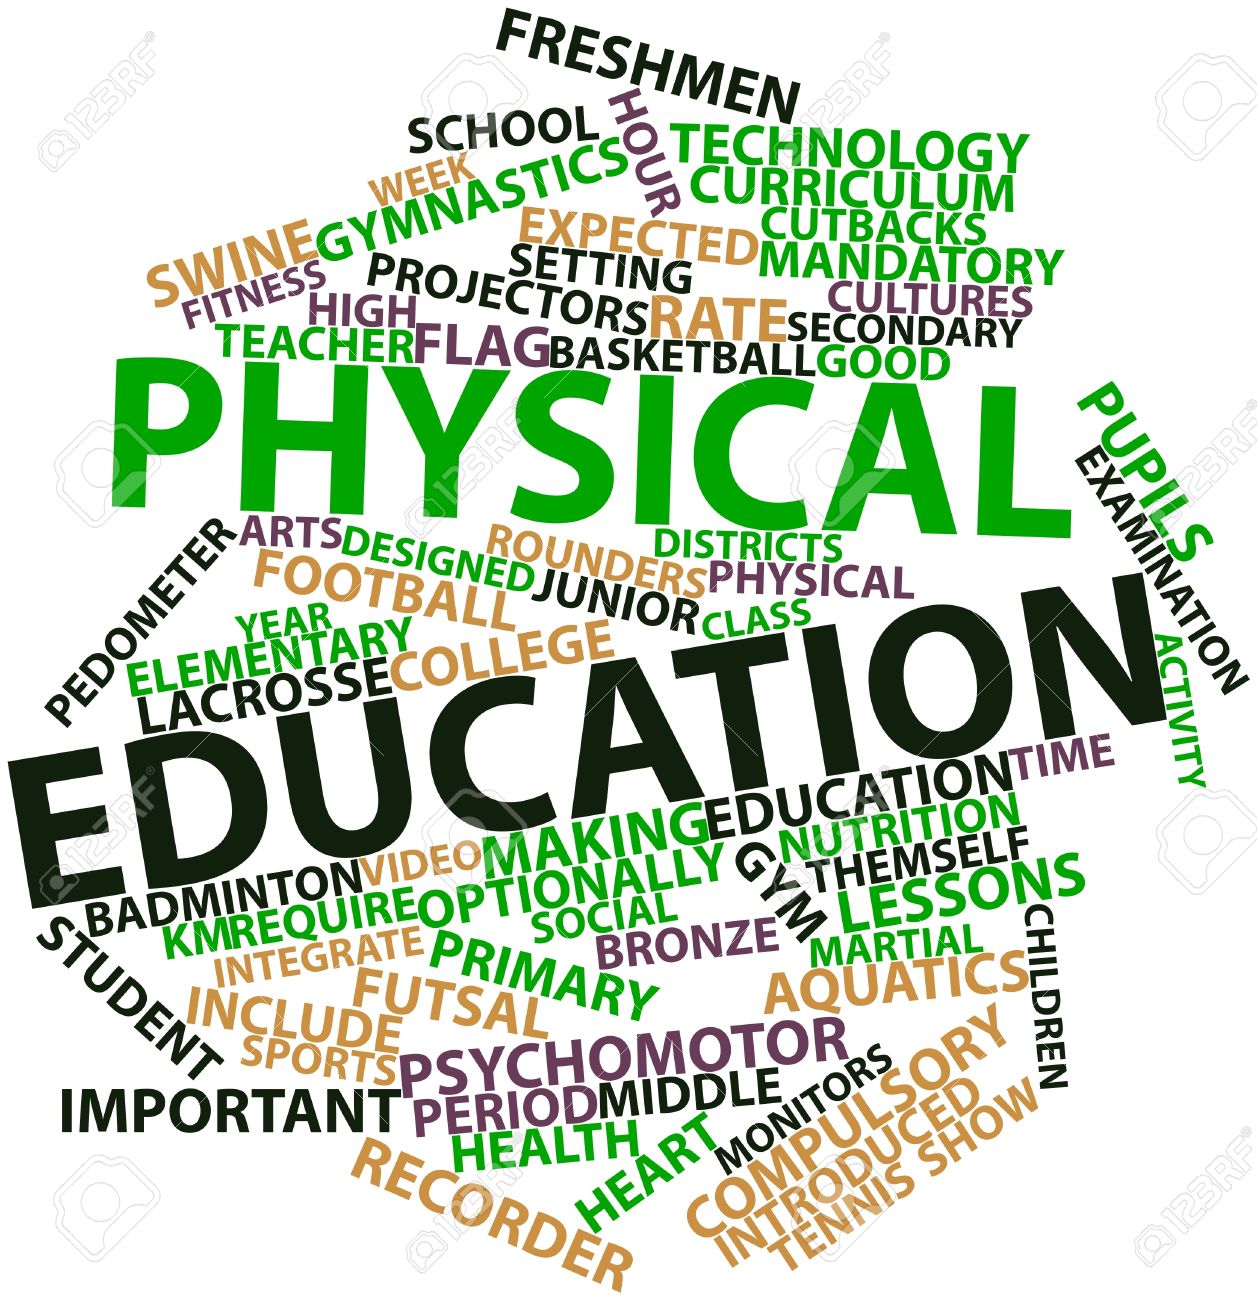 Physical education essay